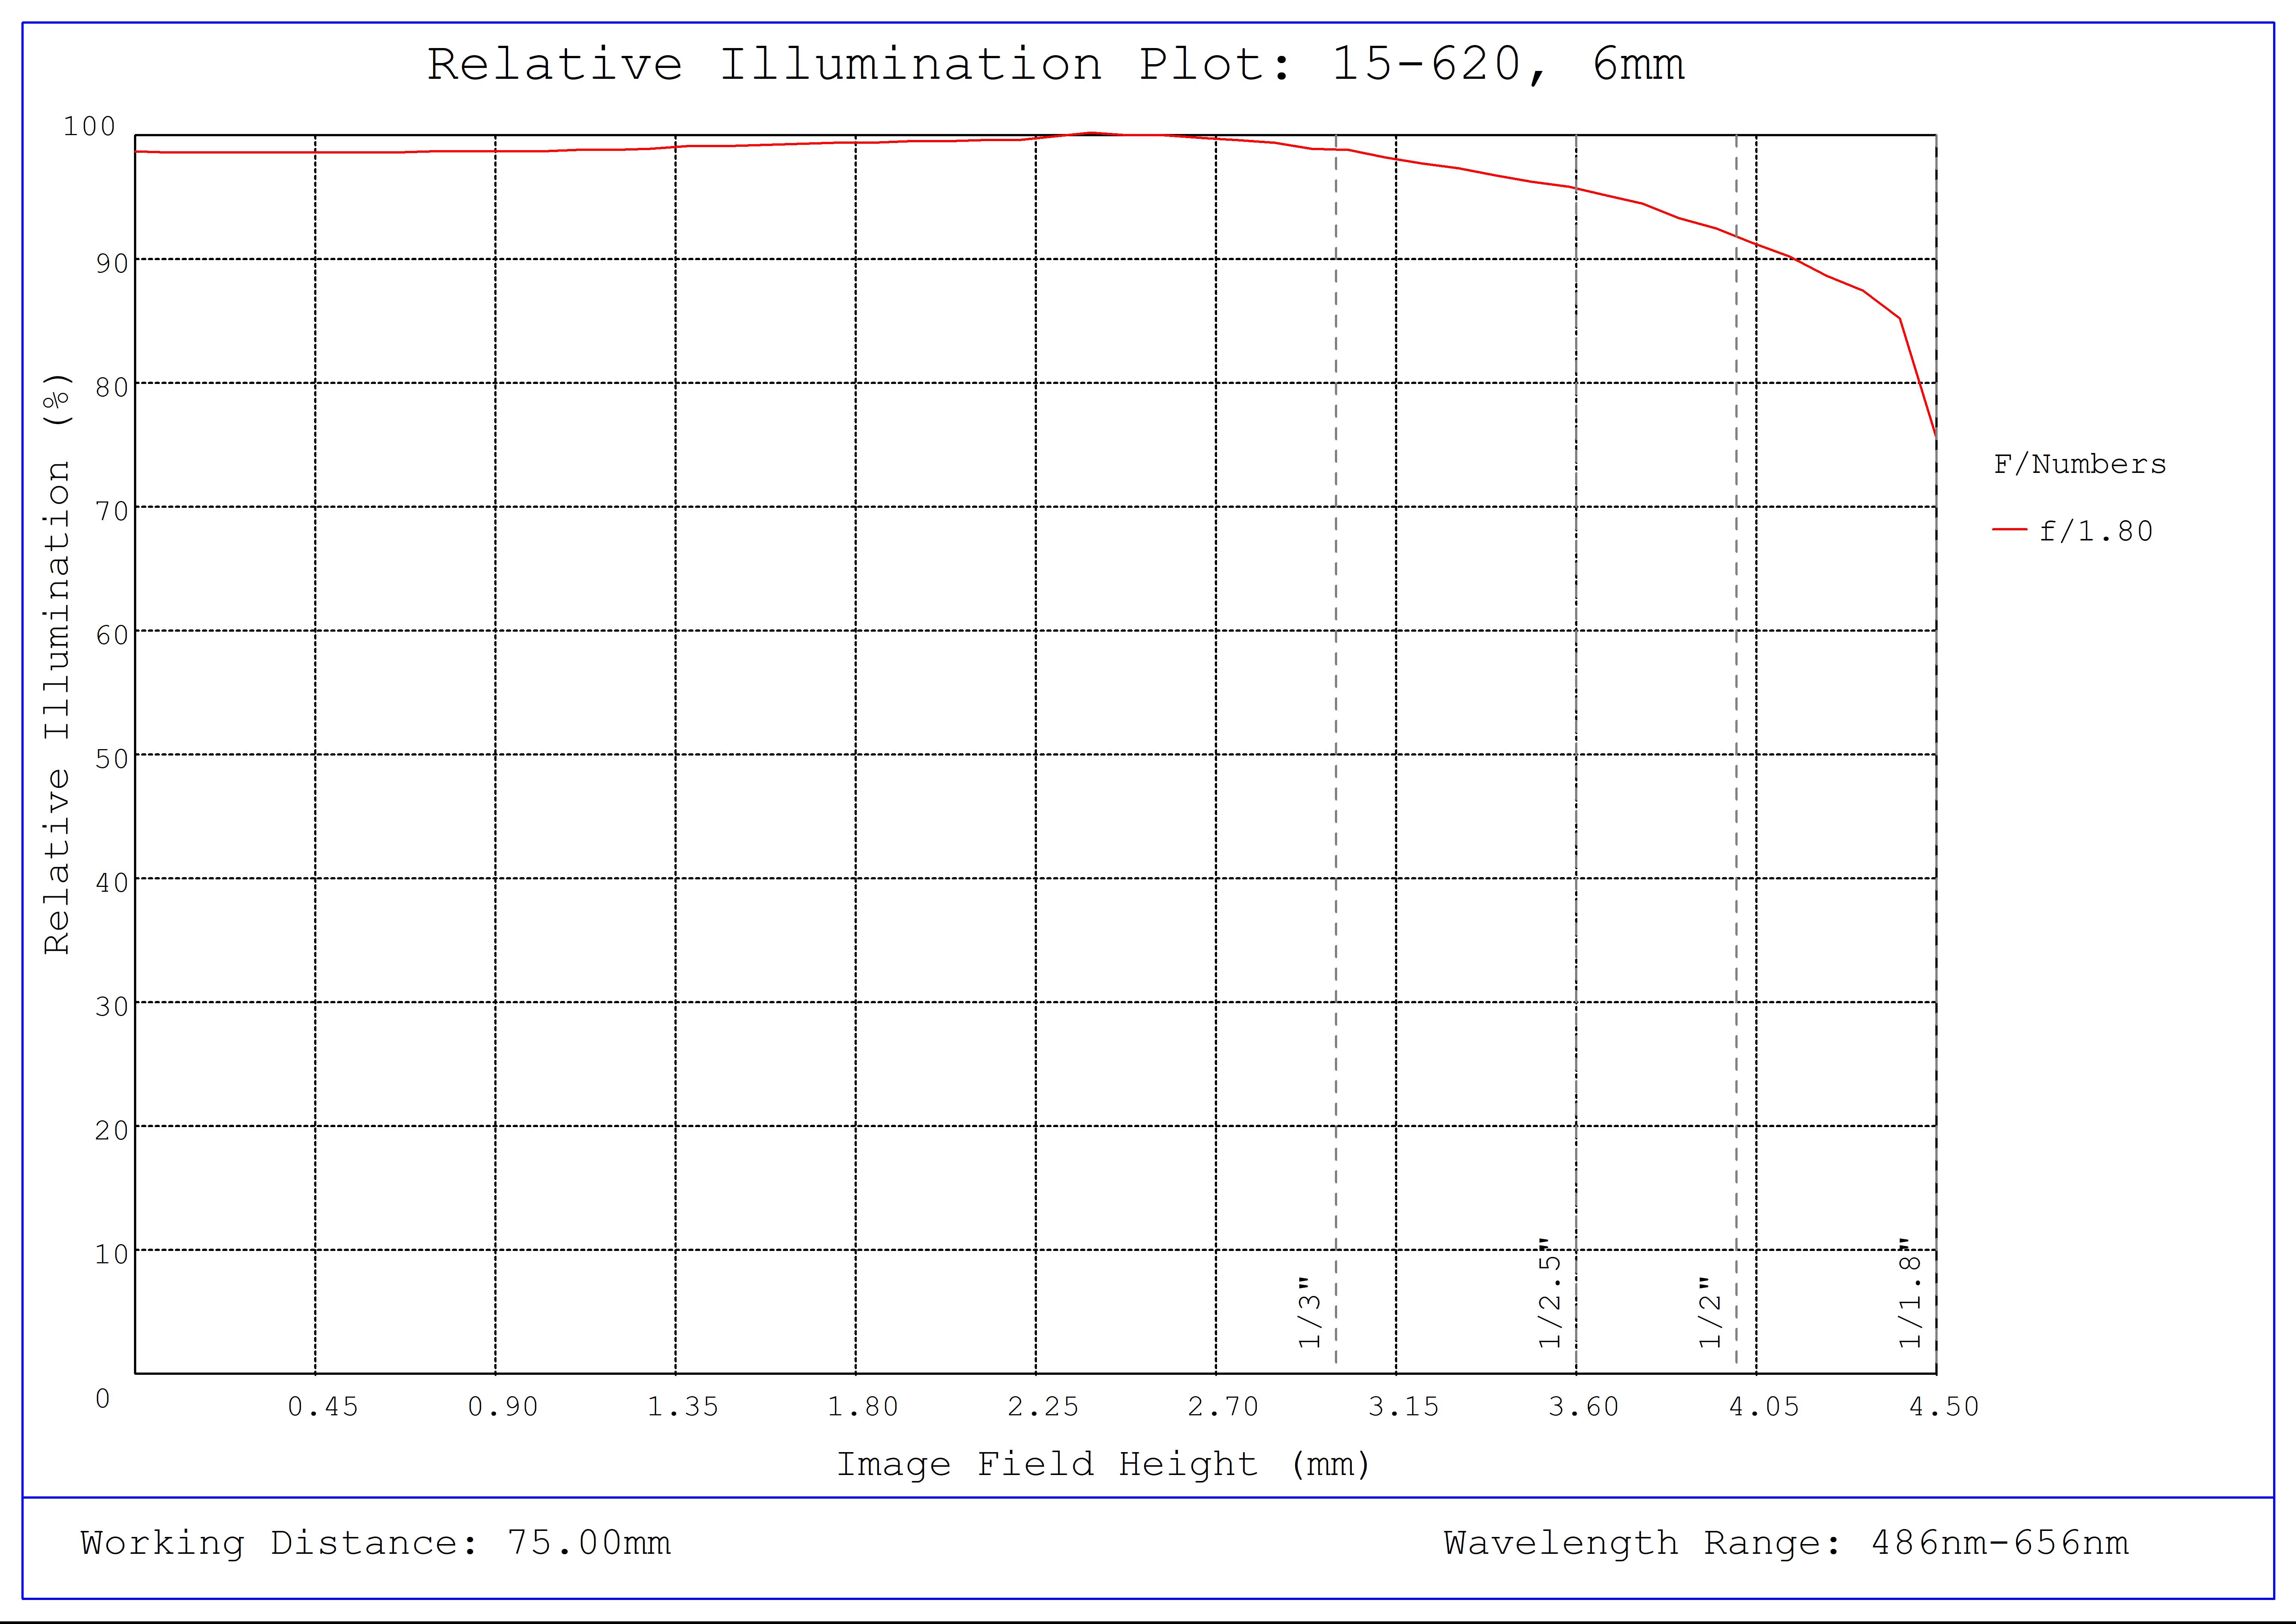 #15-620, 6mm, f/1.8 Cw Series Fixed Focal Length Lens, Relative Illumination Plot